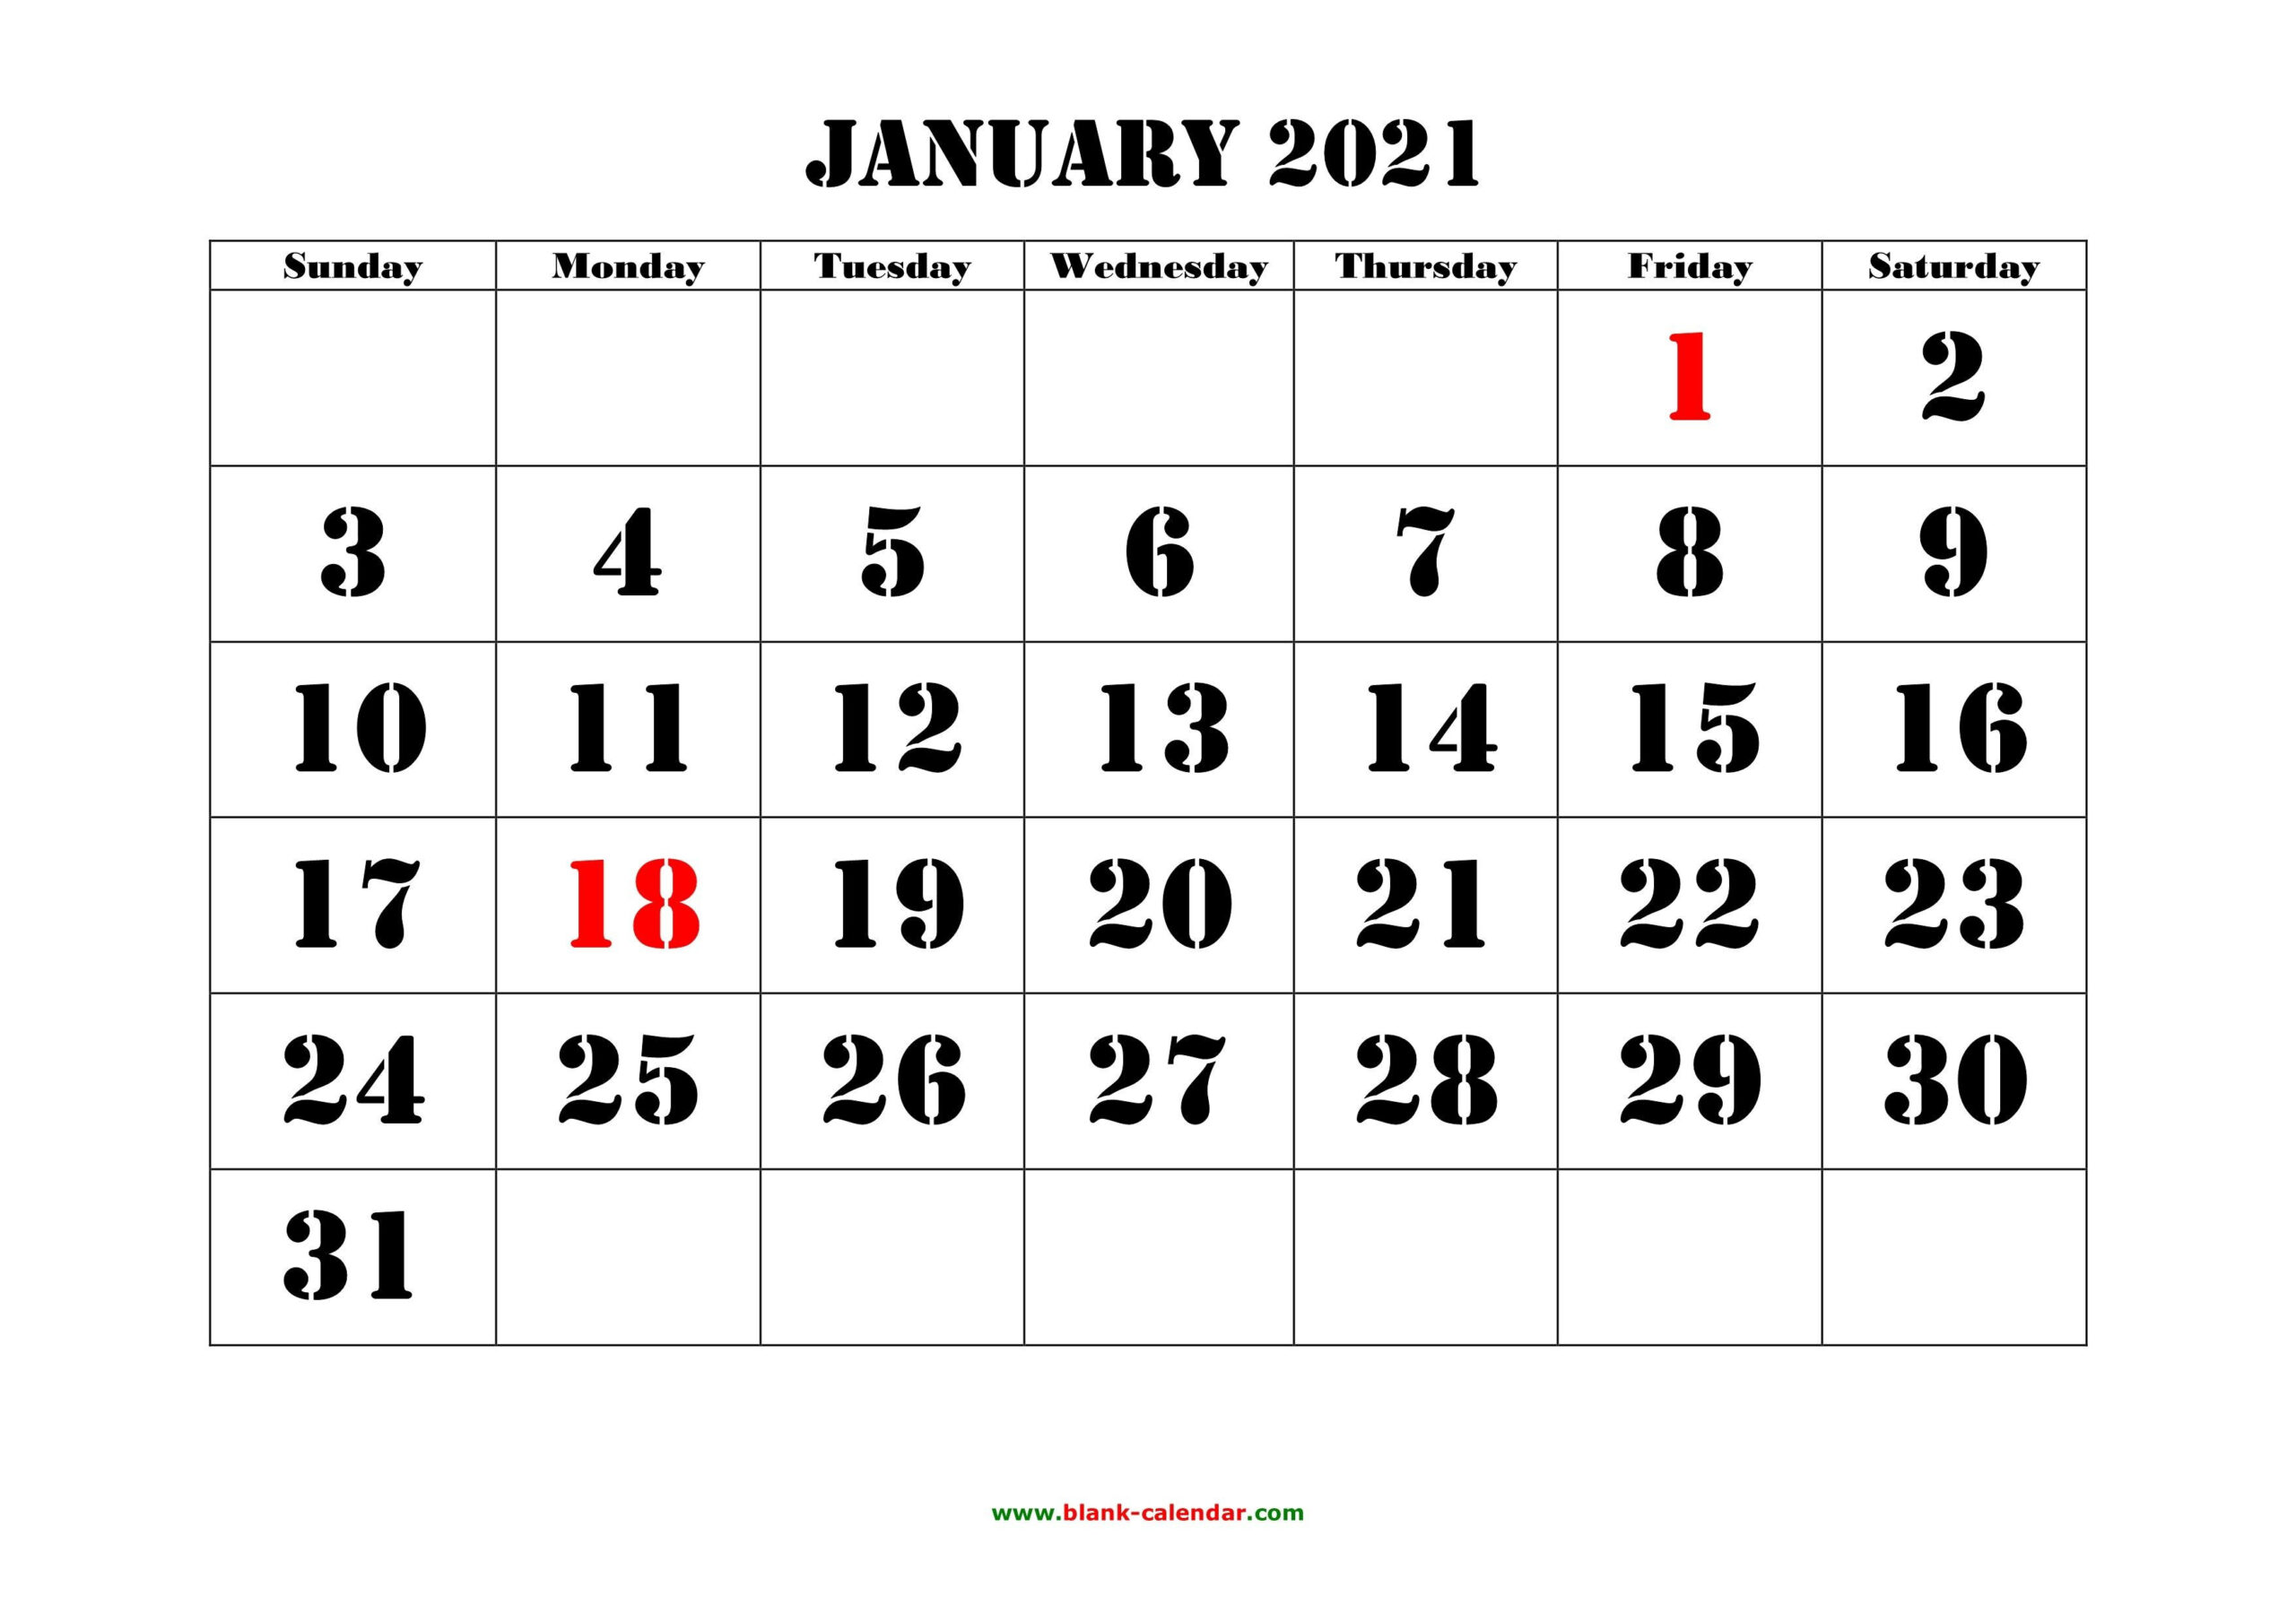 January 2021 Calendar - Free Download Printable Calendar-Blank Calendar Template 2021